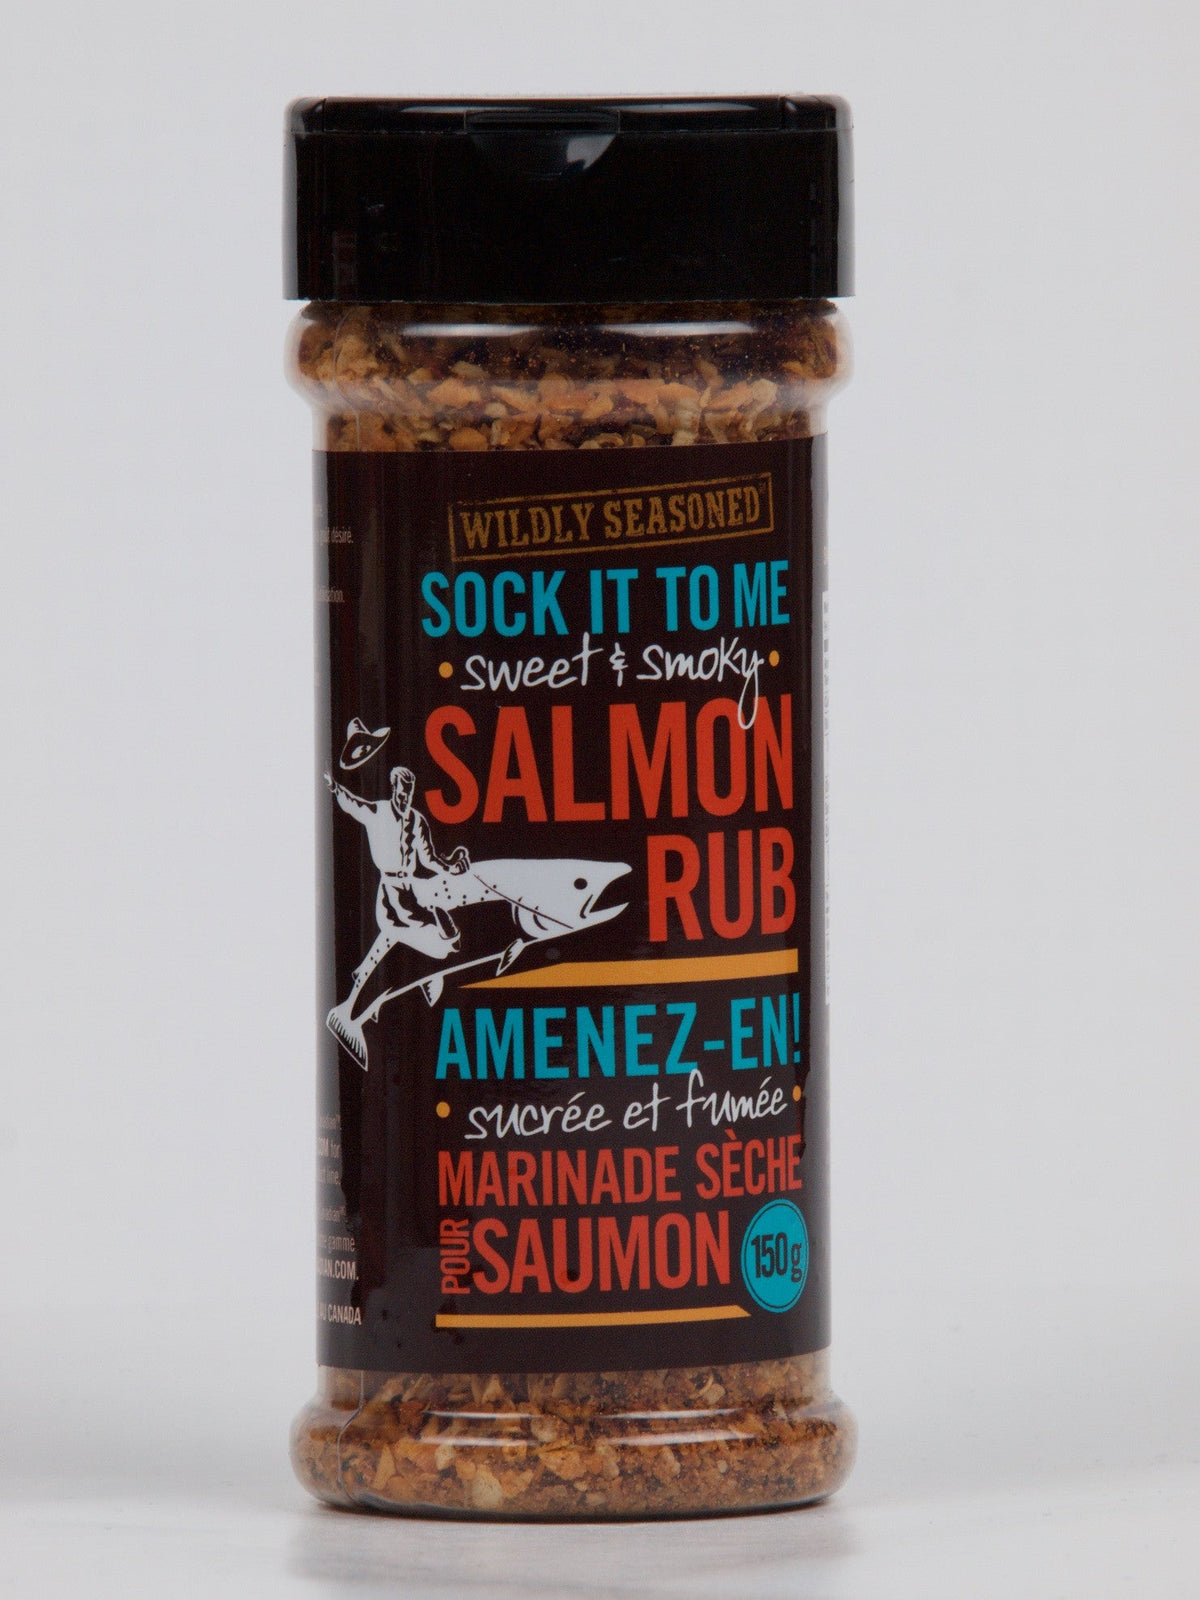 Wildly Seasoned Sock It To Me Sweet & Smoky Salmon Rub